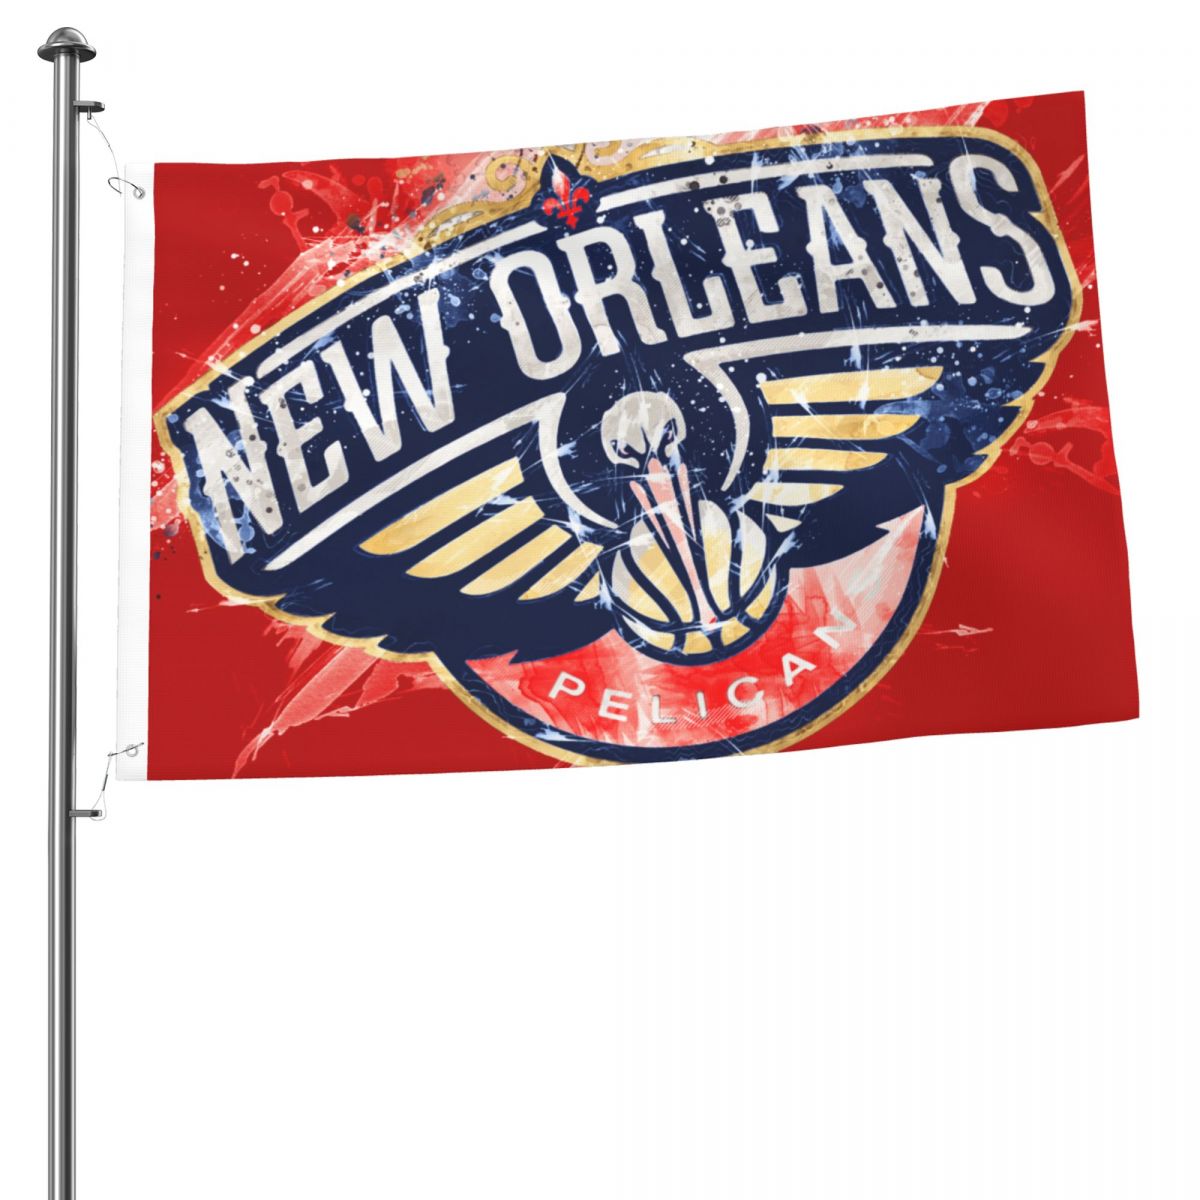 New Orleans Pelicans Grunge Art Logo 2x3FT Flag